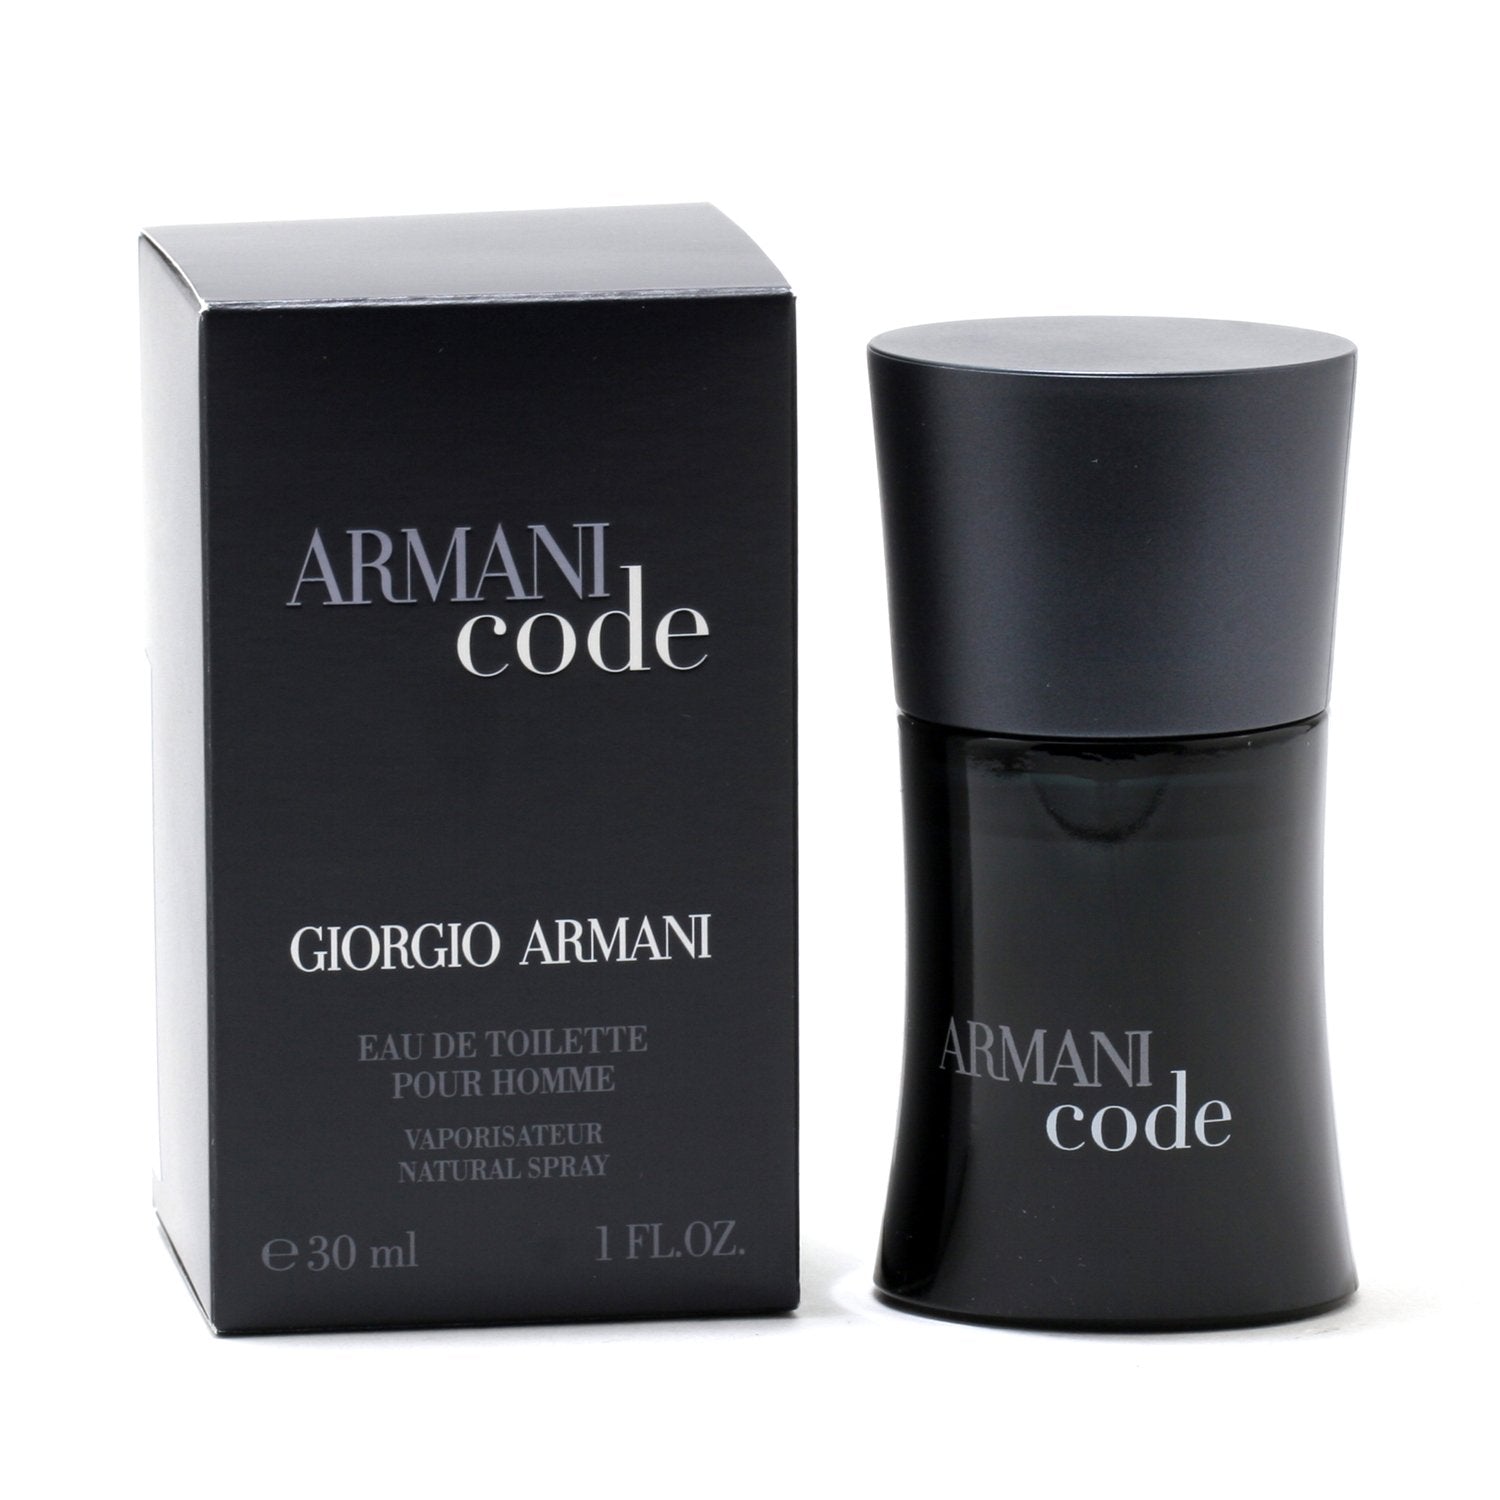 Армани черный мужской. Giorgio Armani Black code for men. Armani Black code. Armani code for men. Giorgio Armani code men.